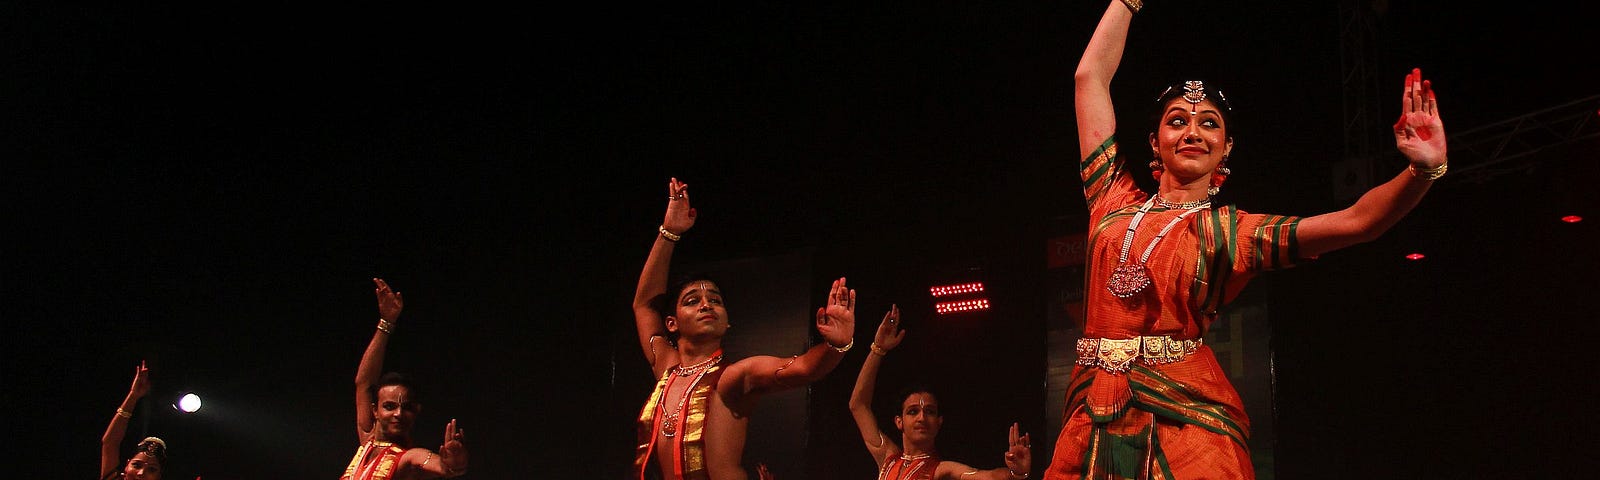 Bharatanatyam dance performance by Guru Saroja Vaidyanathan’ disciples at Youth Festival 2012